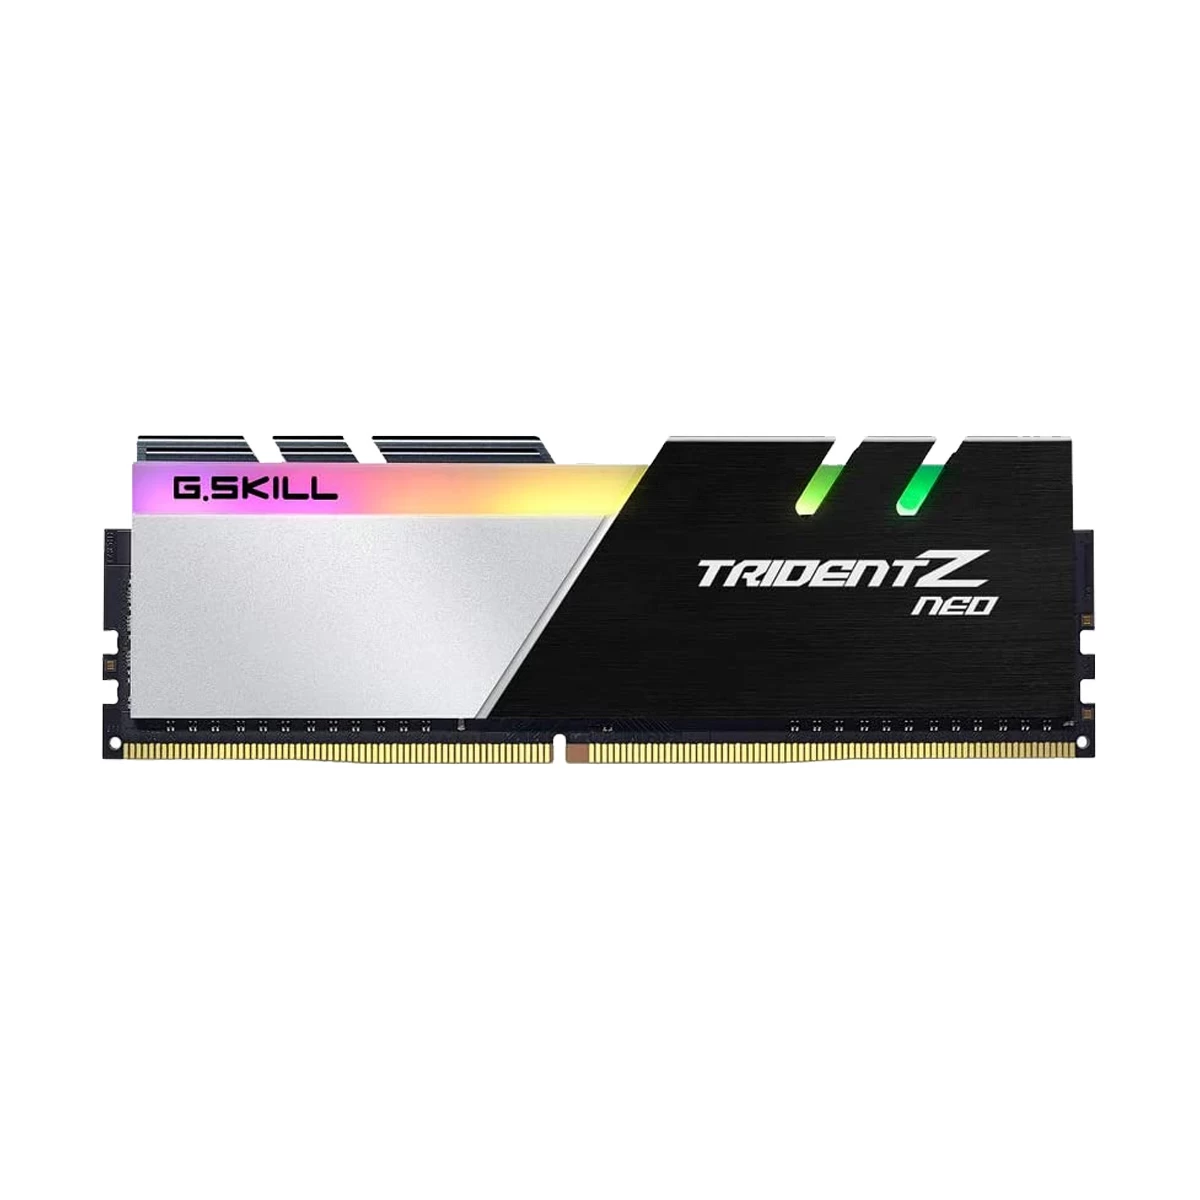 G.Skill Trident Z Neo RGB 8GB DDR4 3600MHz Desktop RAM